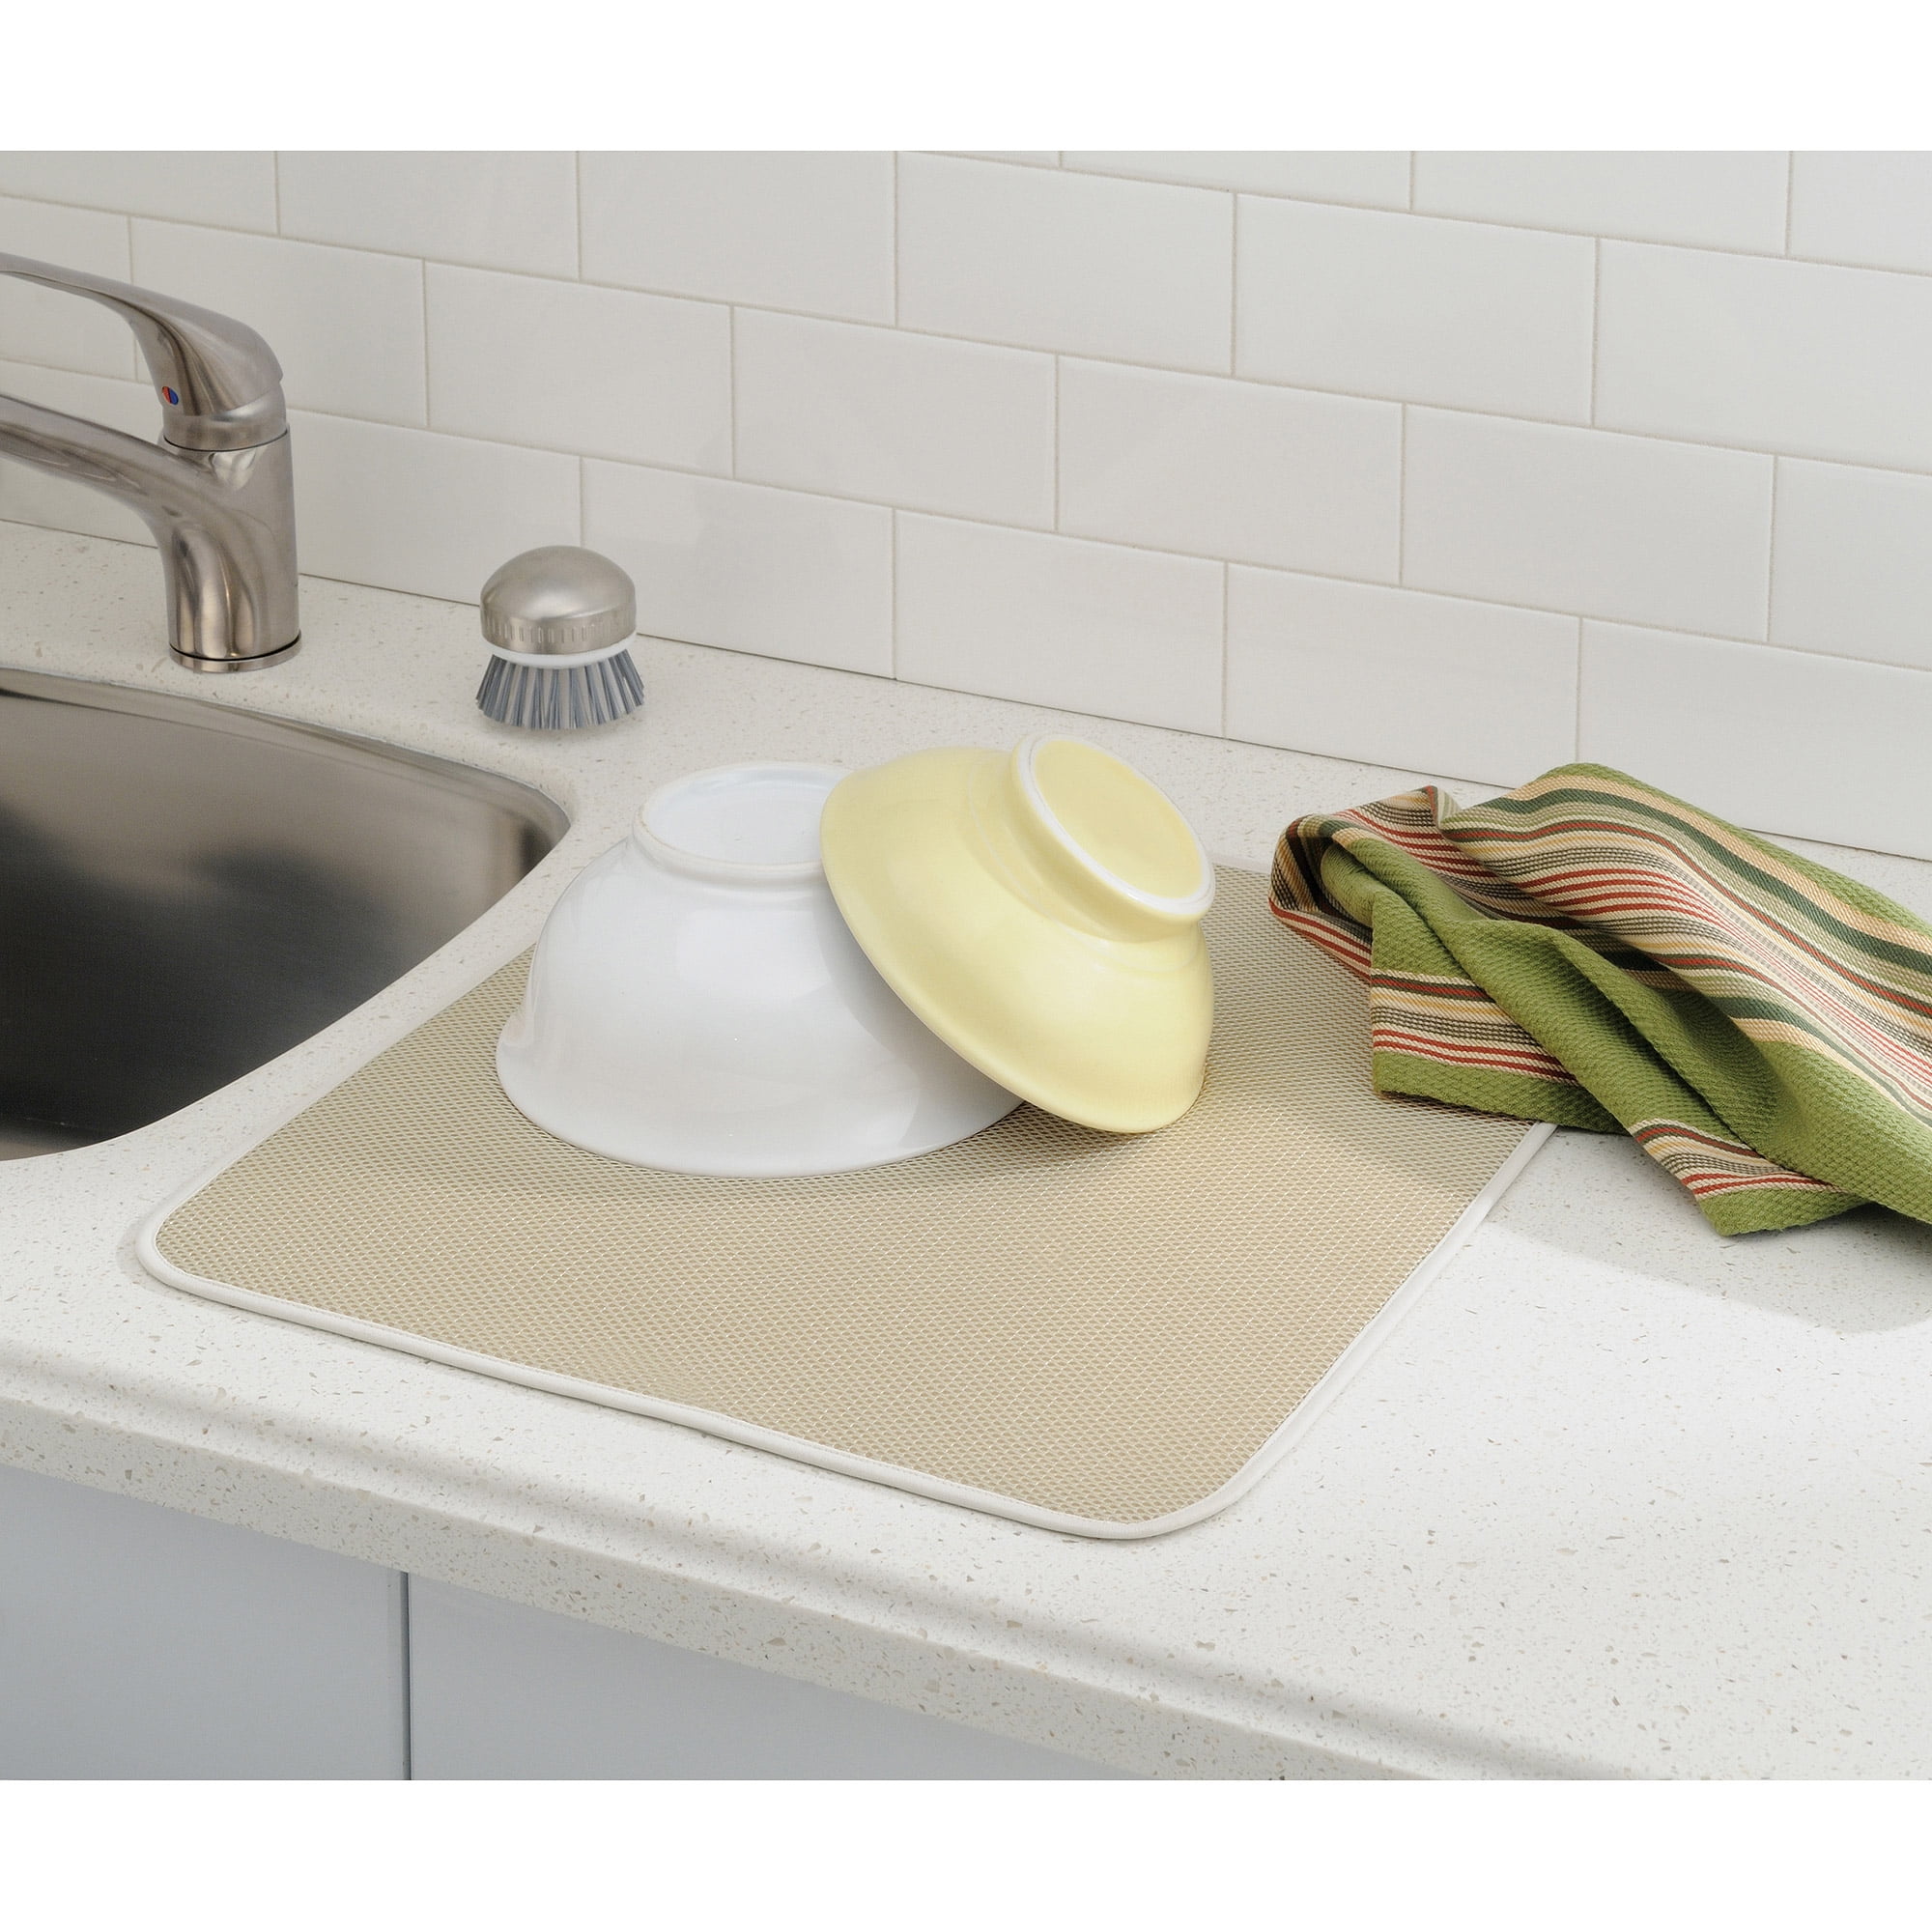  iDesign iDry Microfiber Mini Dish Drying Mat - 18 x 9,  Pewter/Ivory : Home & Kitchen